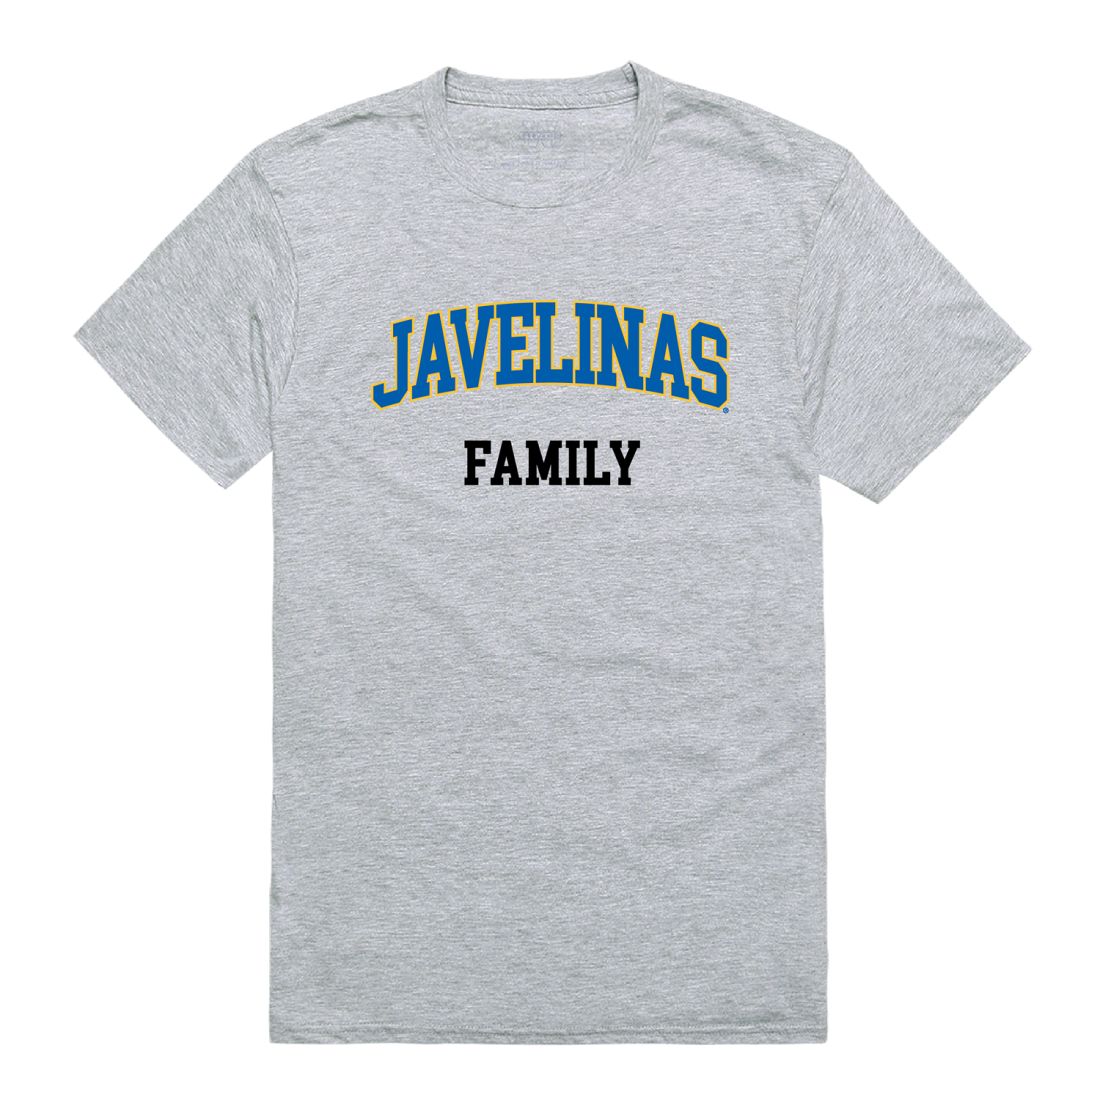 TAMUK Texas A&M University - Kingsville Javelinas Family T-Shirt